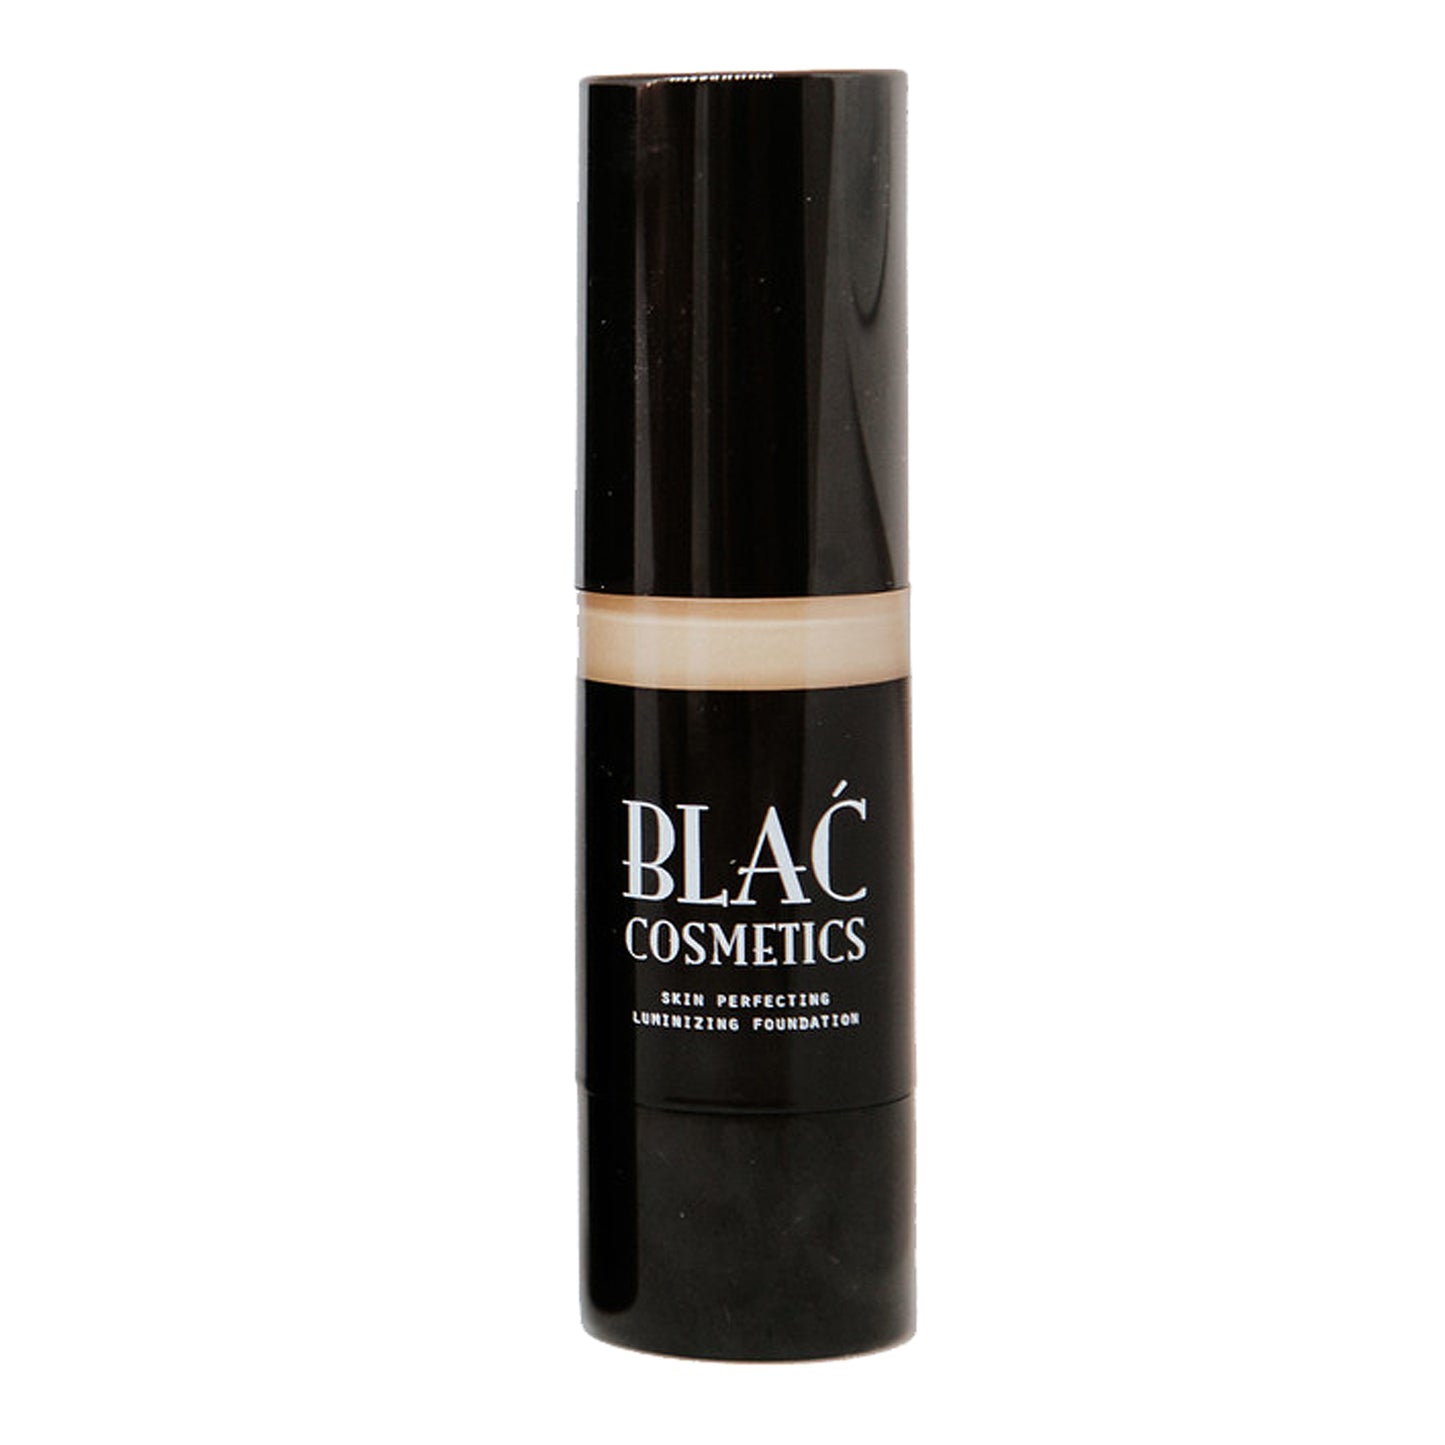 BLAC COSMETICS Skin Perfecting Luminous Foundation